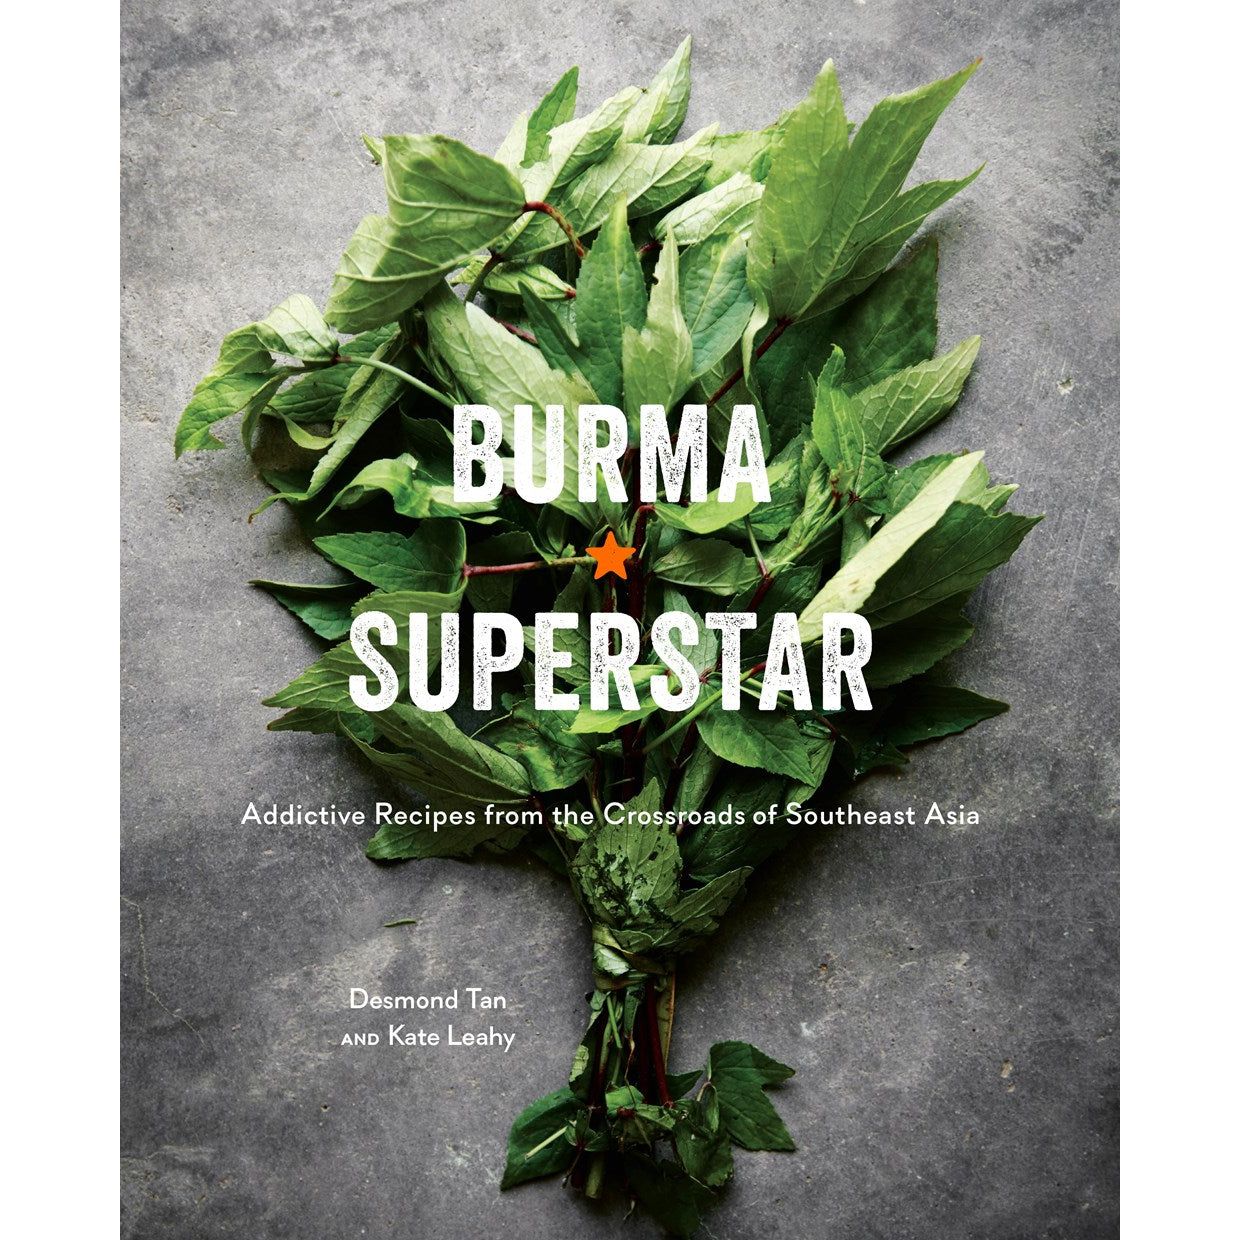 Burma Superstar (Desmond Tan & Kate Leahy)